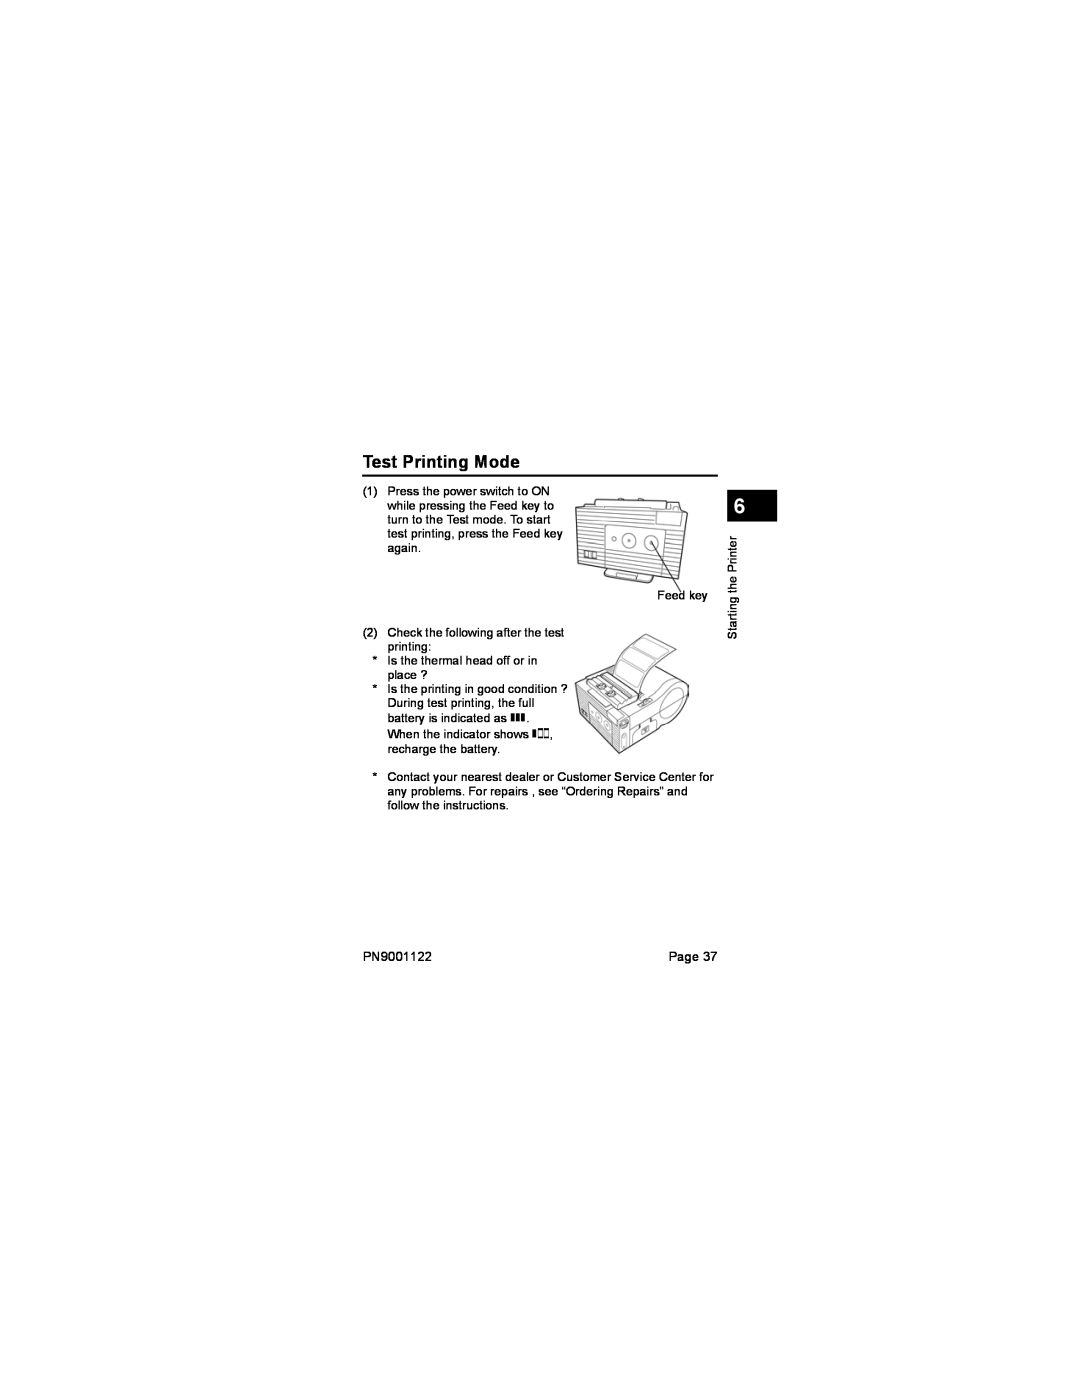 SATO MB200 manual Test Printing Mode, PN9001122 